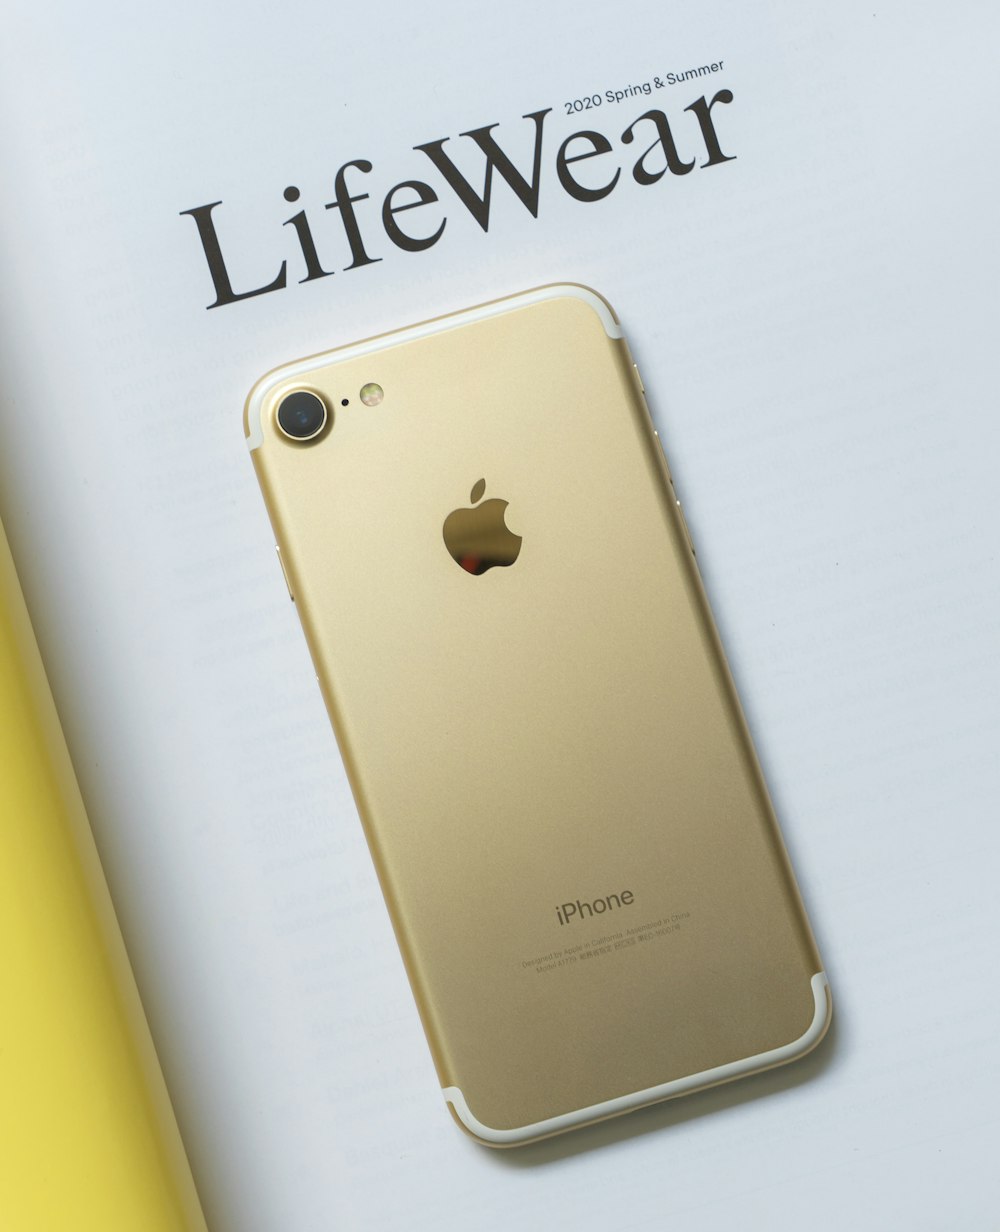 iphone 6 dourado na superfície branca